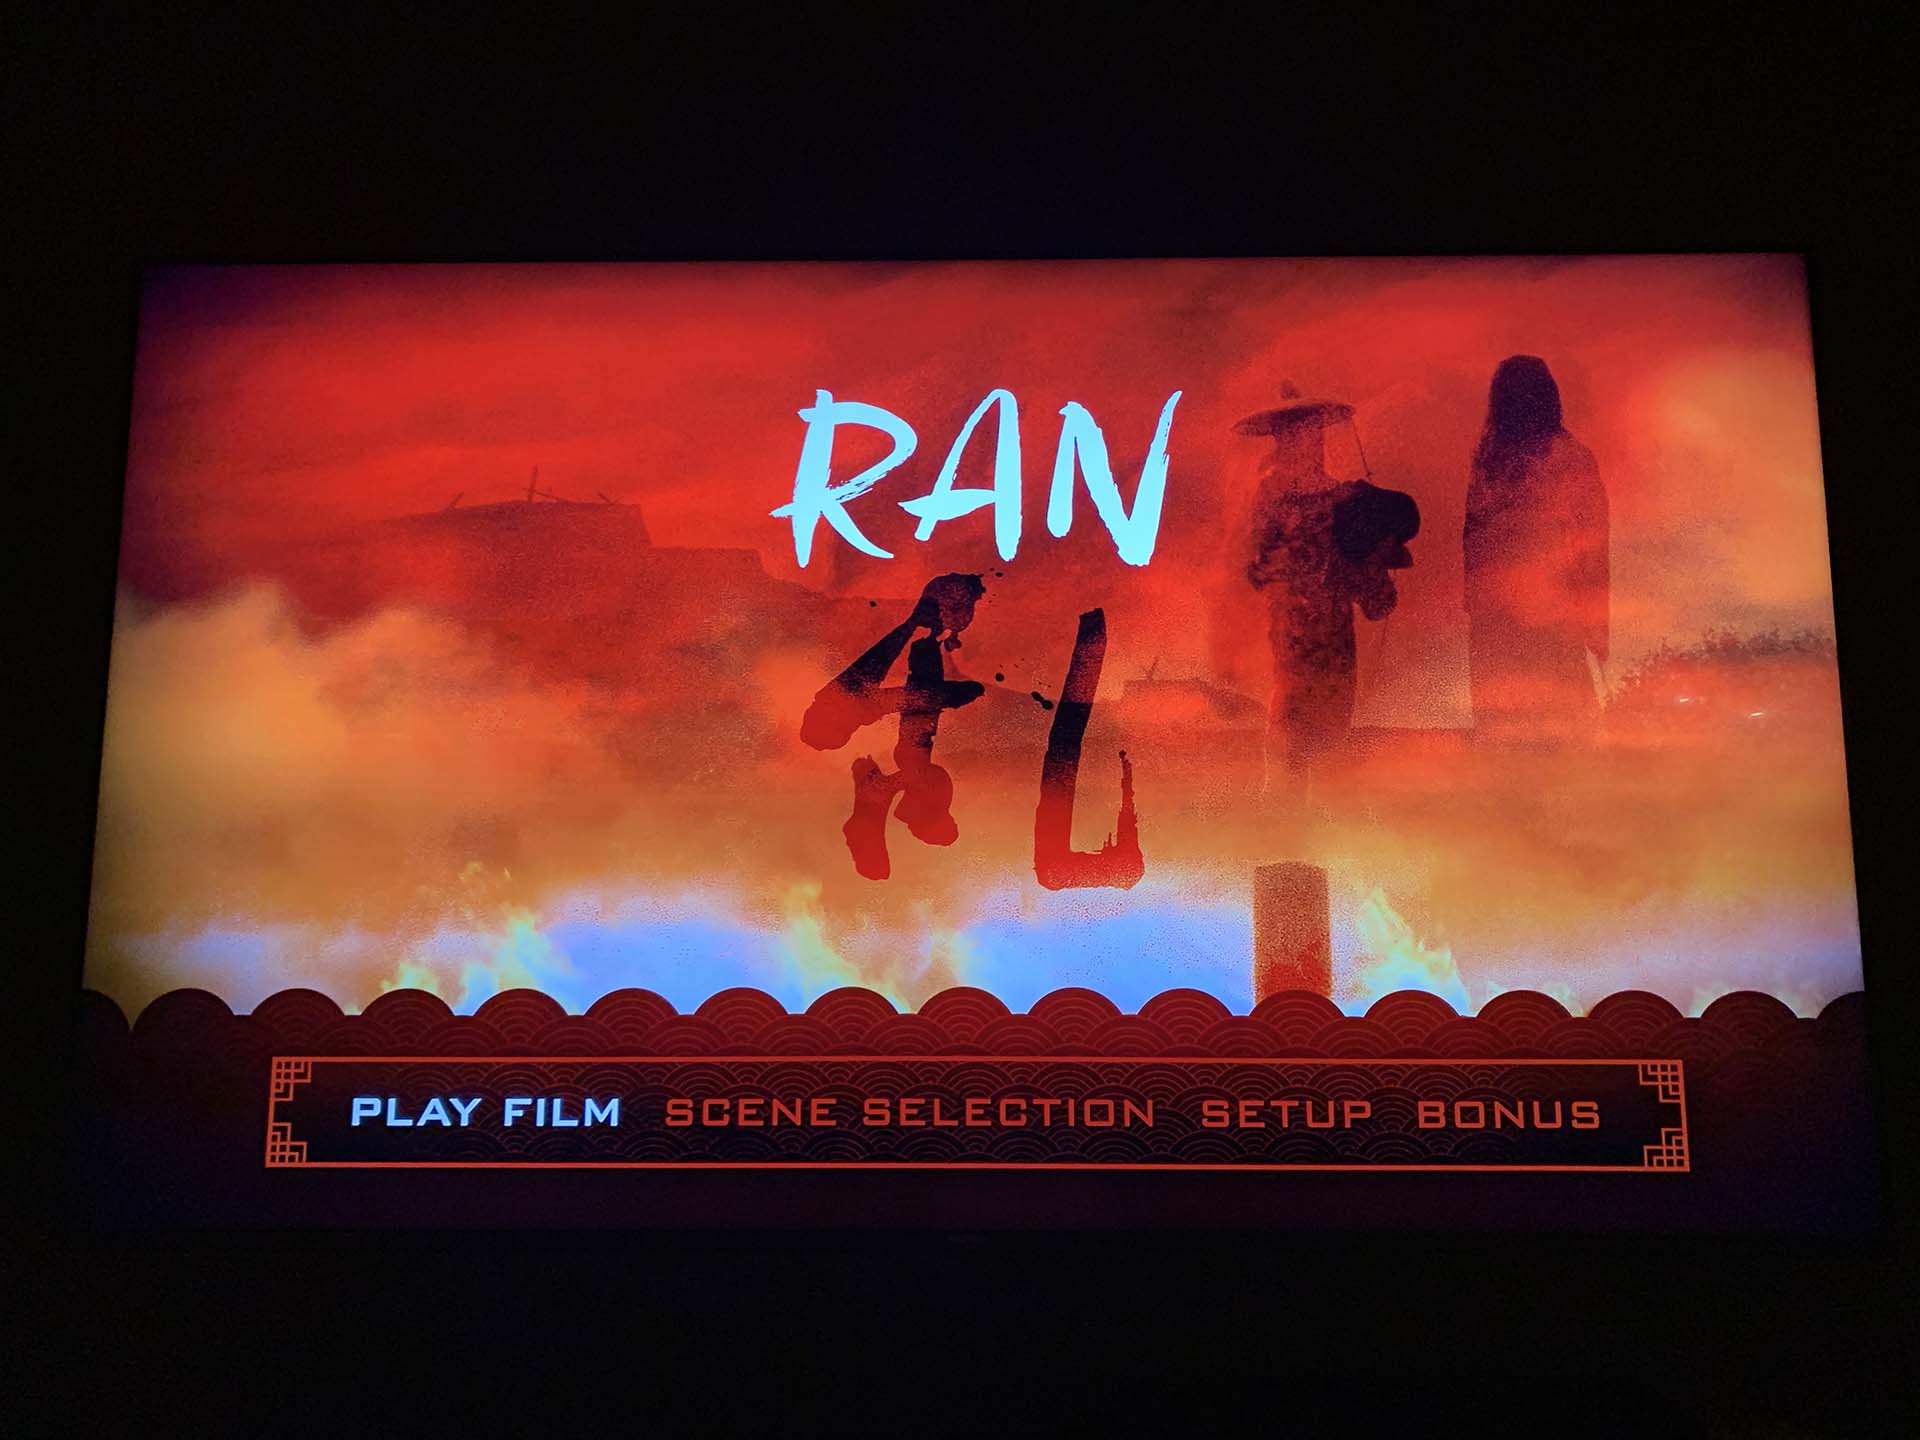 Ran 4k Blu-ray Play